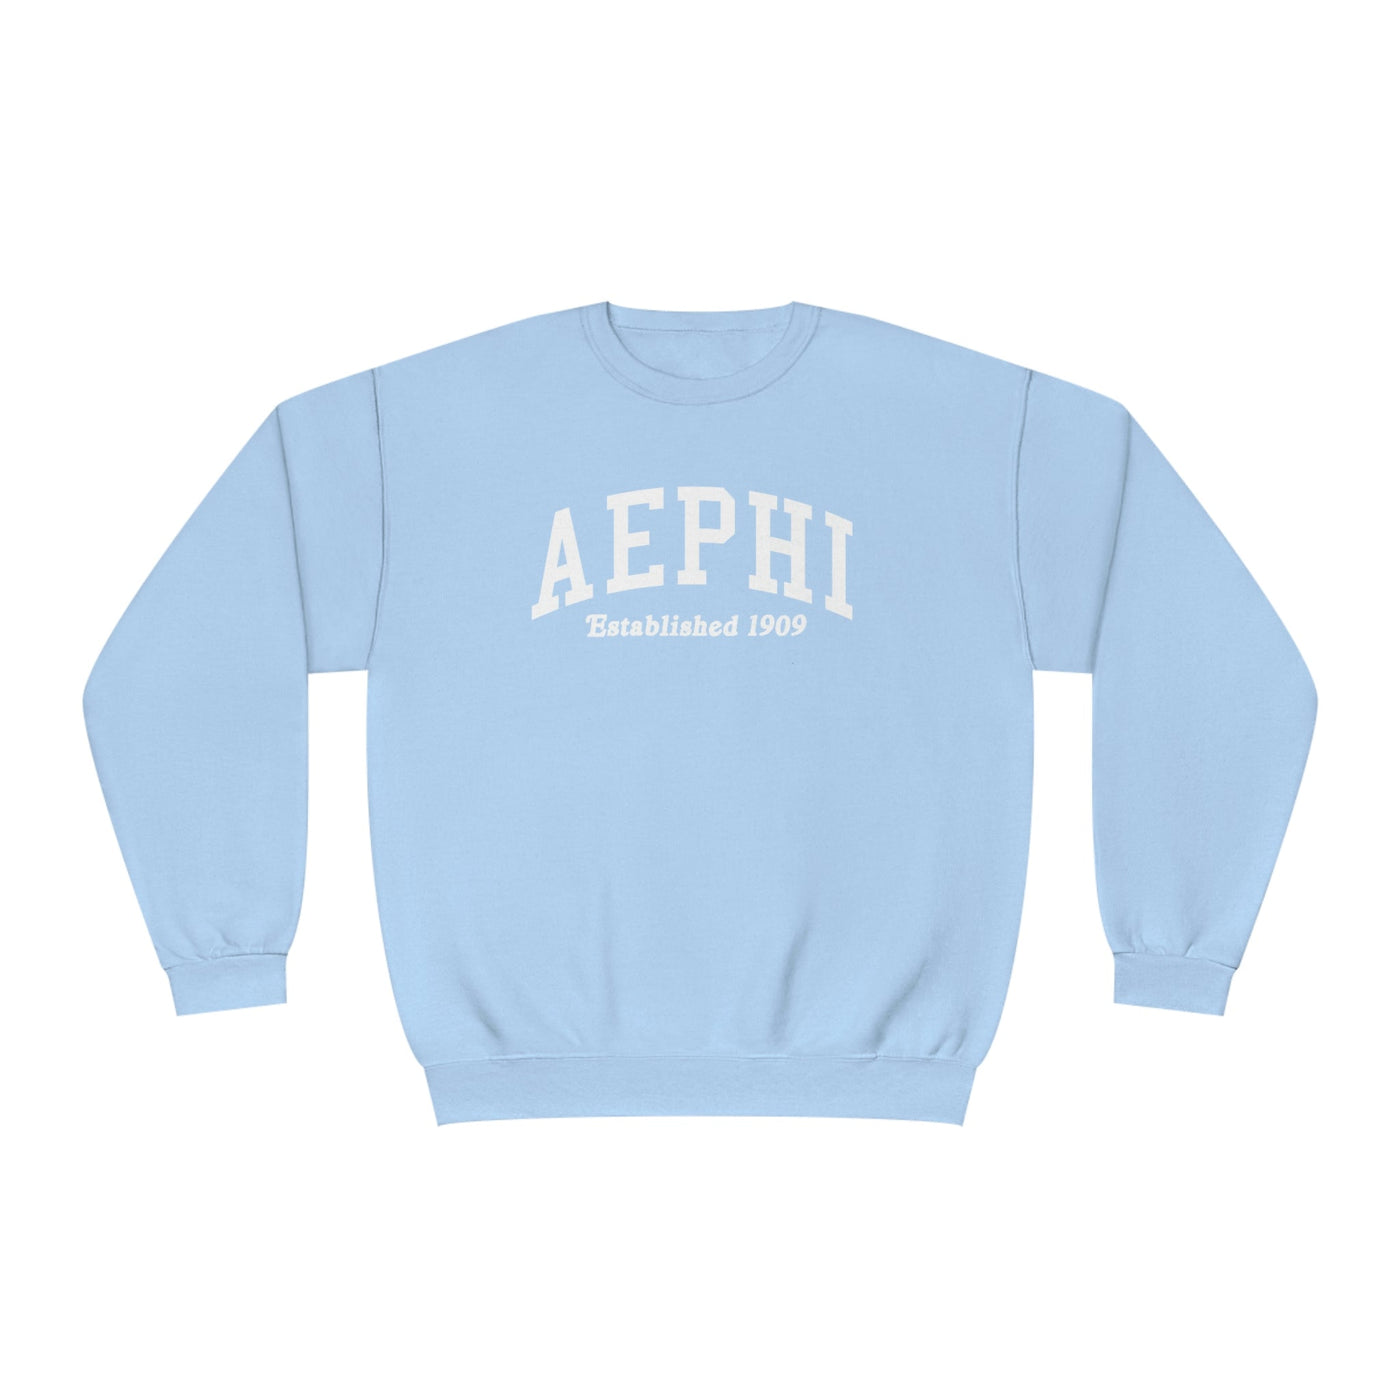 Alpha Epsilon Phi Sorority Varsity College AEPhi Crewneck Sweatshirt